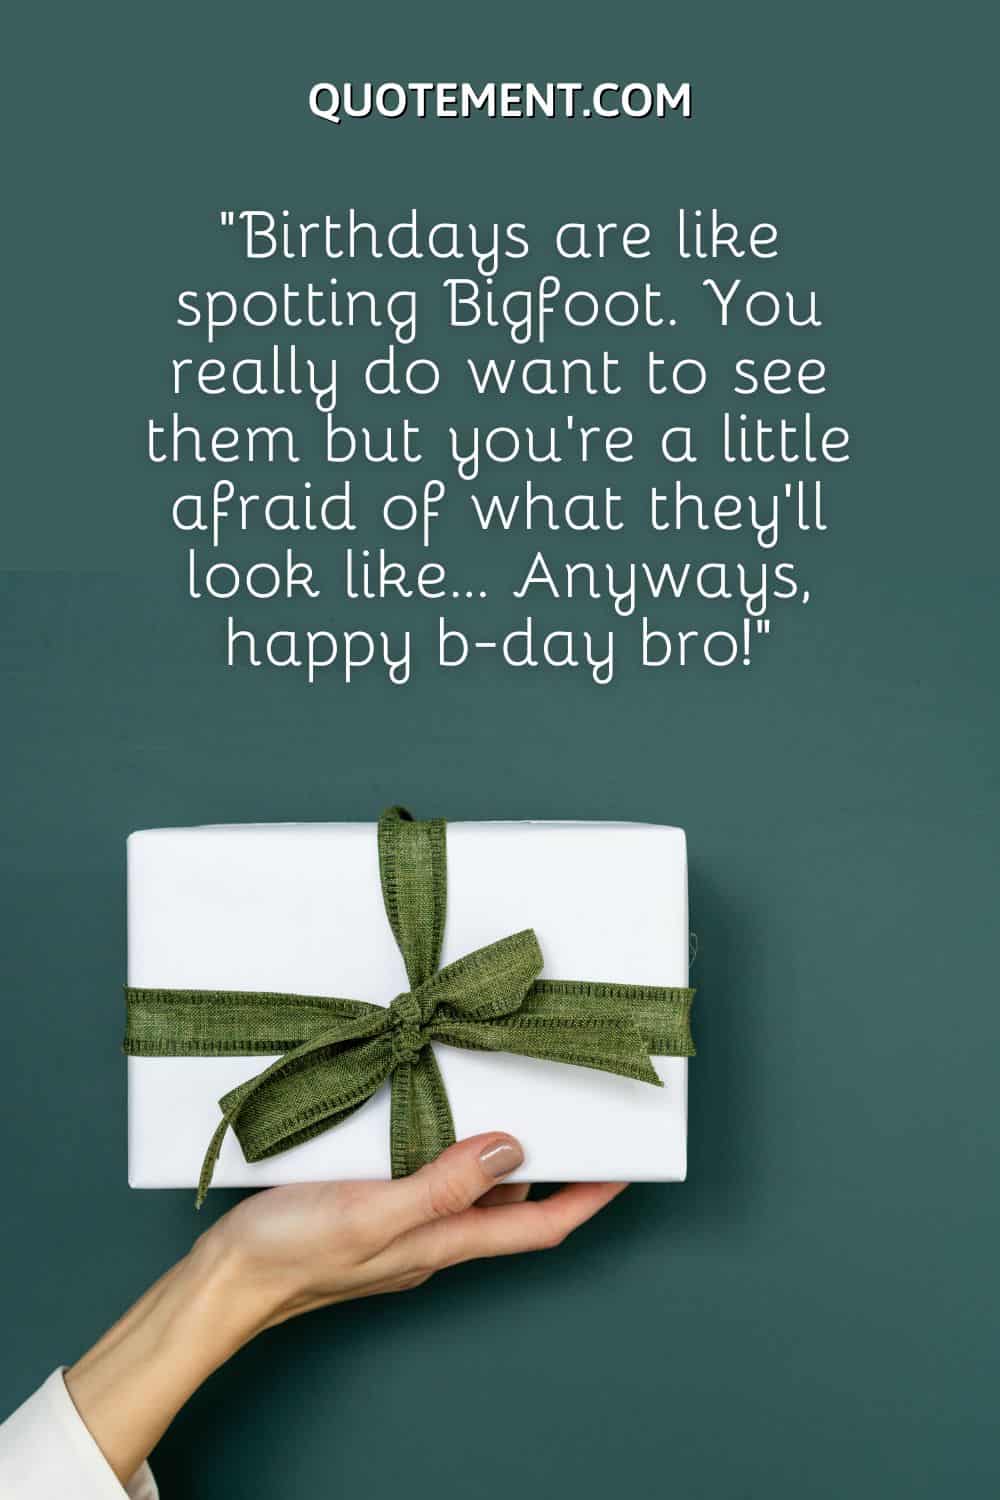 Birthdays are like spotting Bigfoot